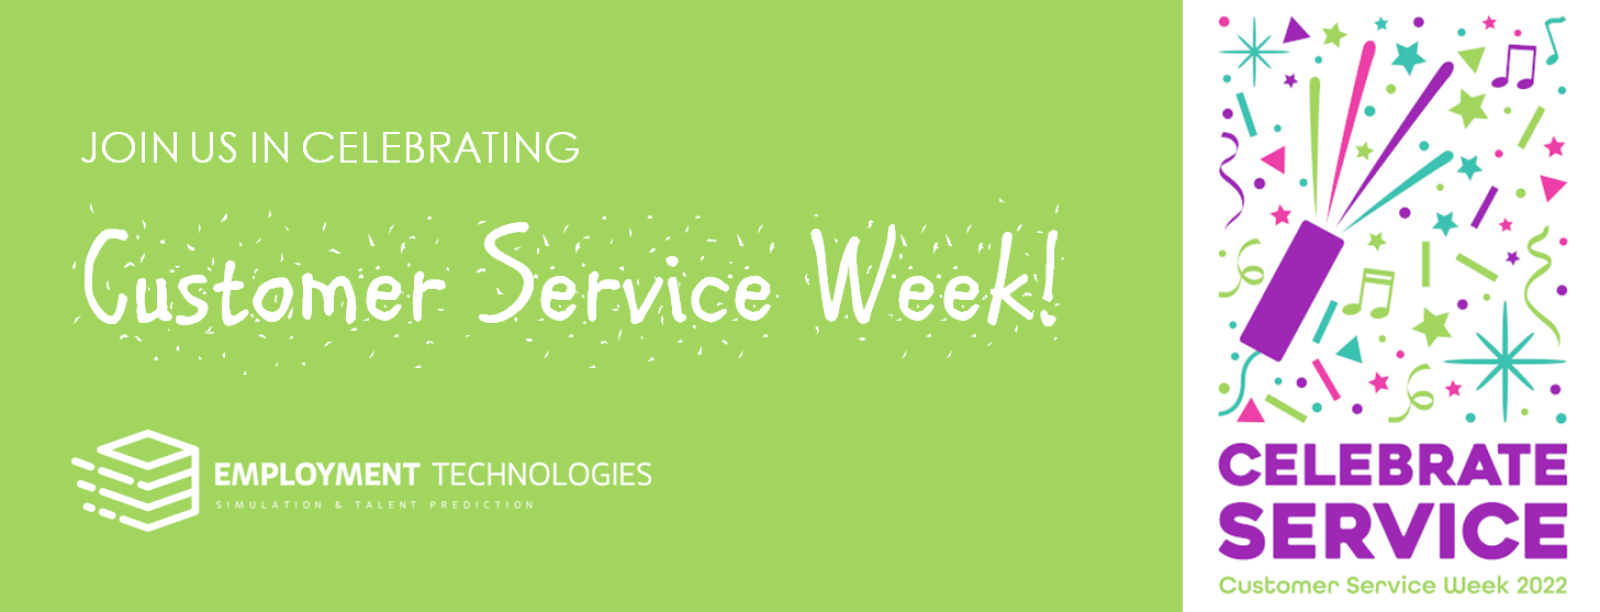 Celebrating Customer Service Week, October 3-7, 2022